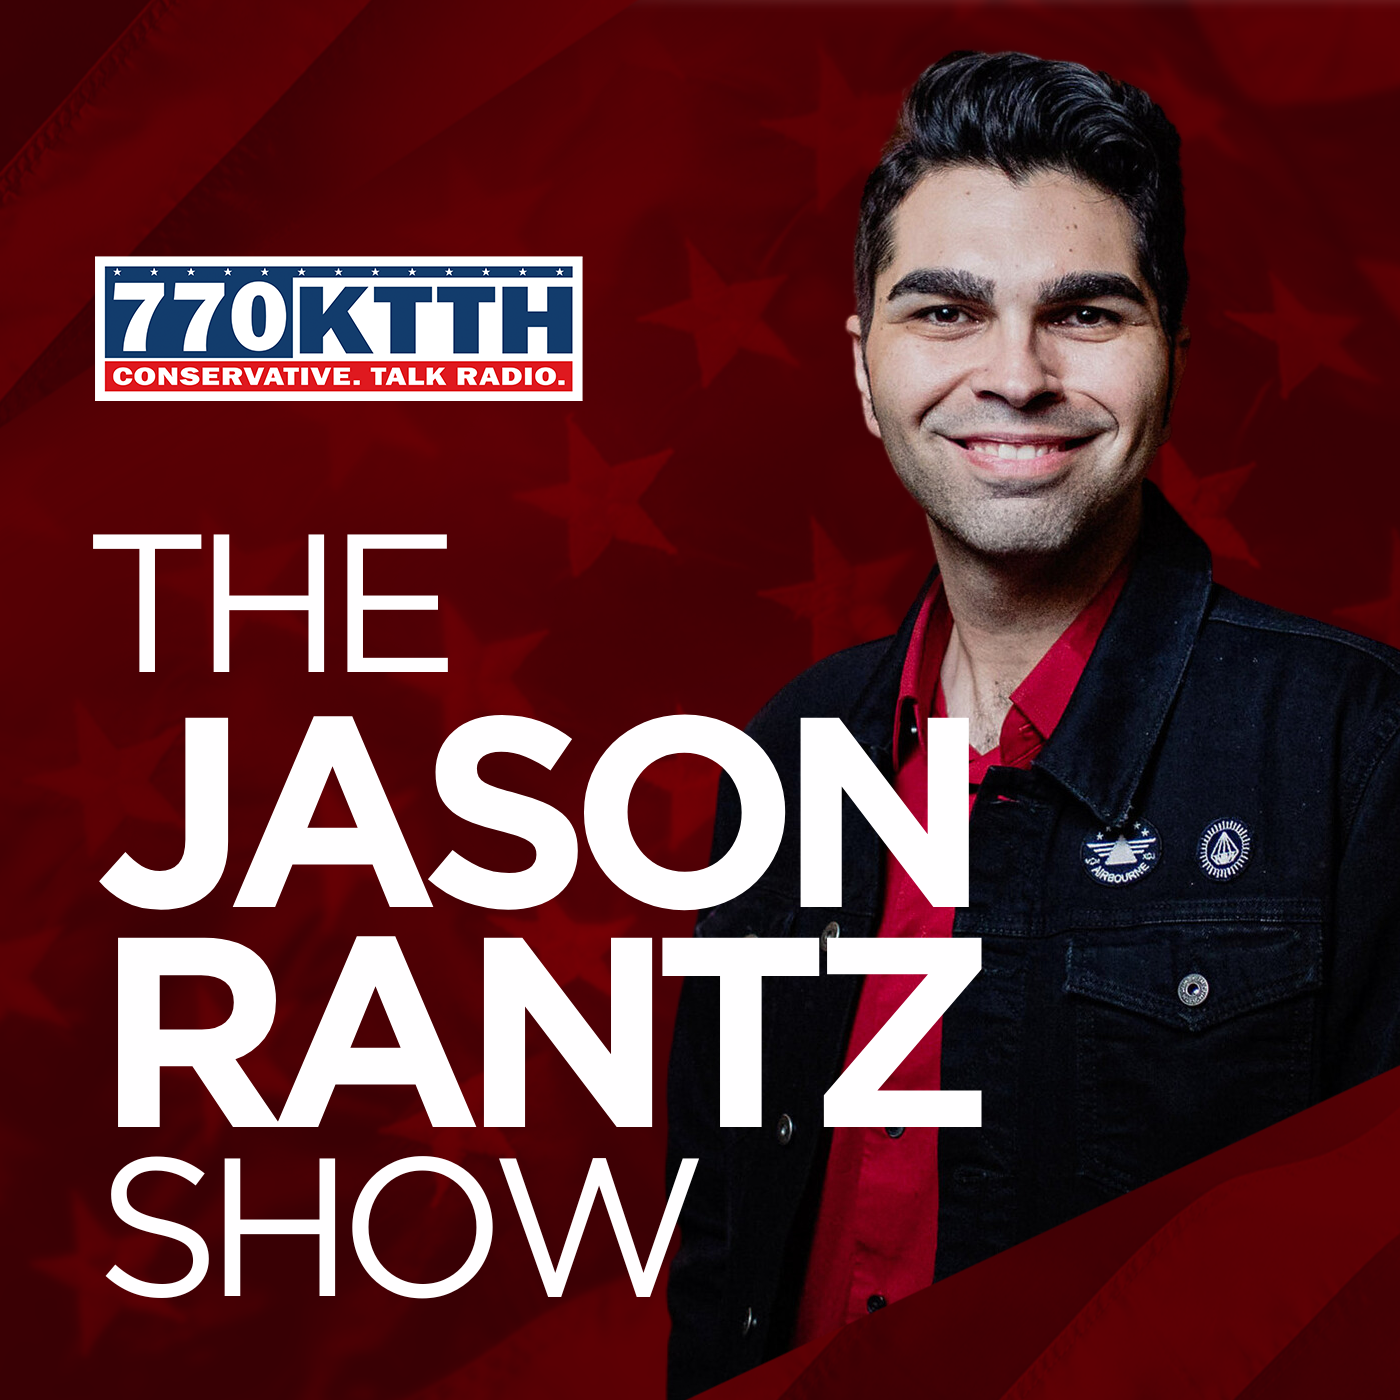 Highlights - The Jason Rantz Show show image